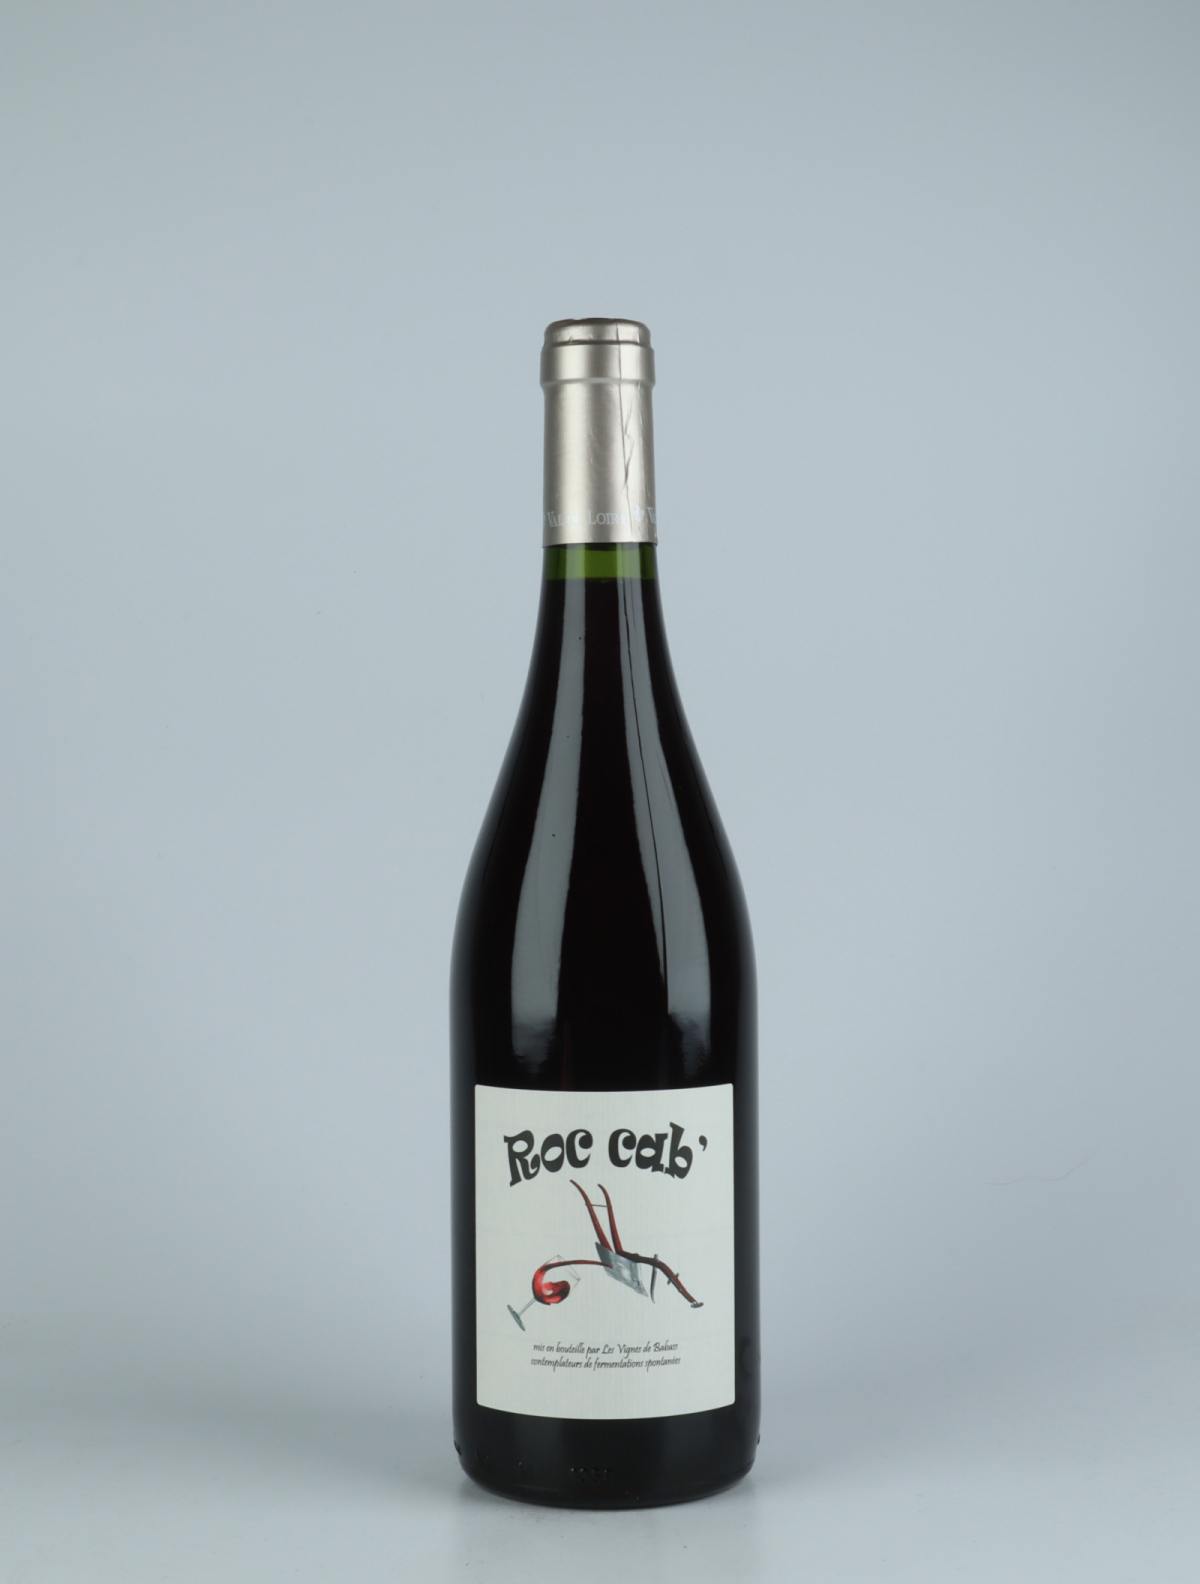 A bottle 2020 Roc Cab Red wine from Les Vignes de Babass, Loire in France